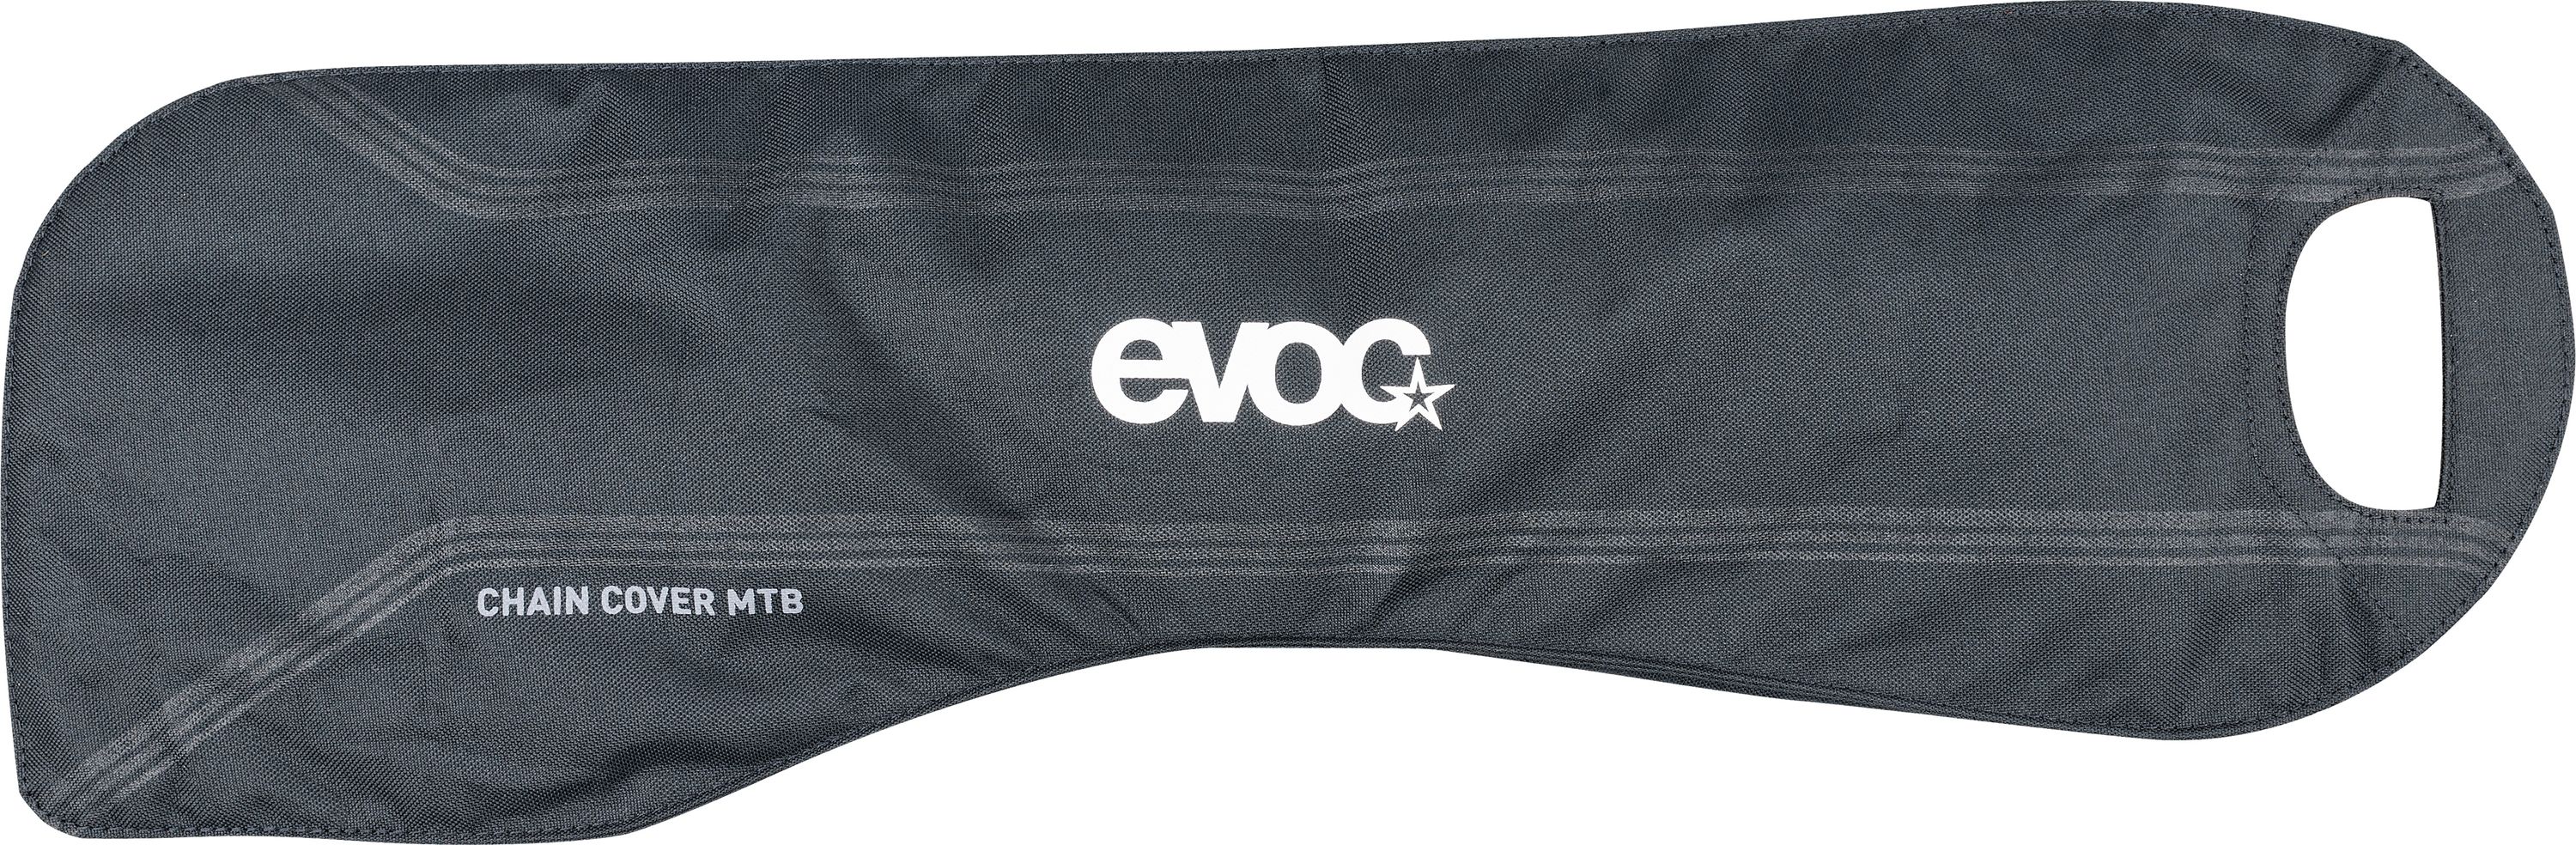 evoc Chain Cover MTB - Fahrradketten-Abdeckung